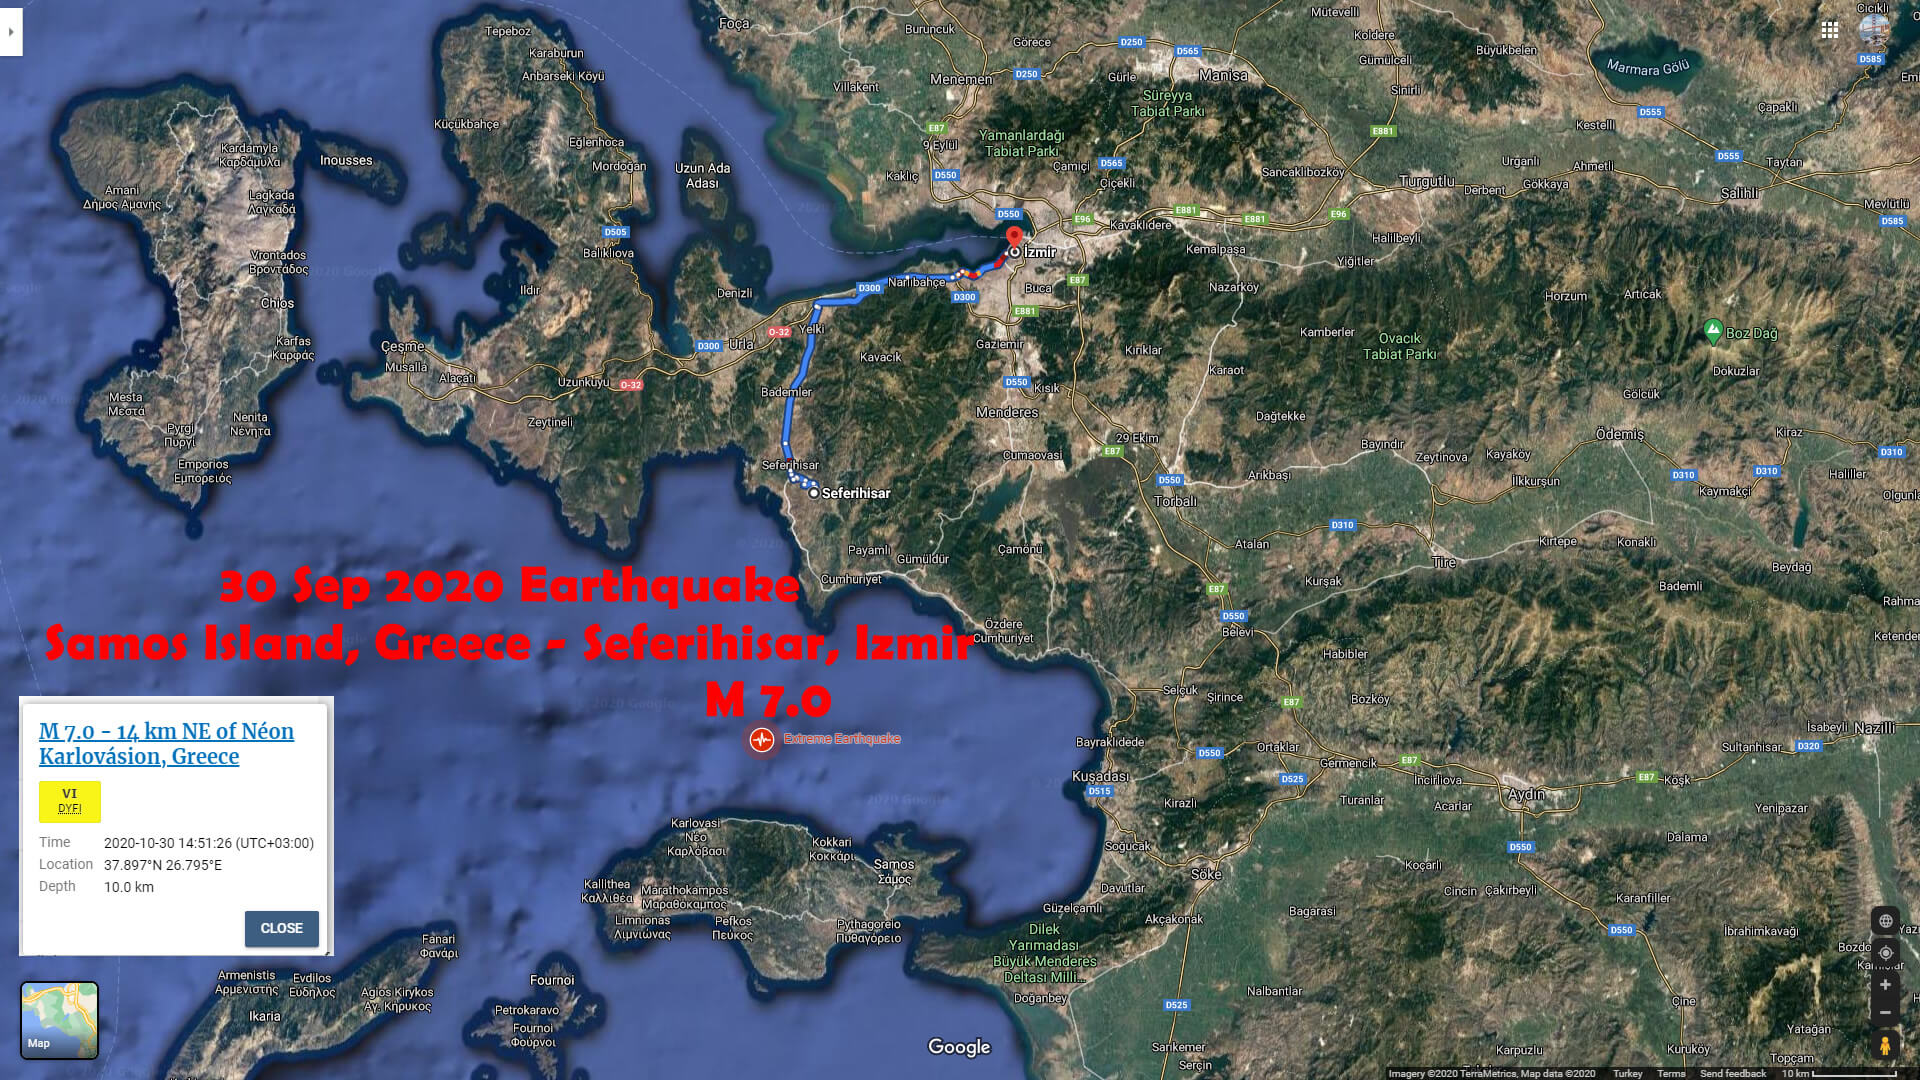 Samos Greece - Seferihisar Izmir - Sep 30 Earthquake Satellite Map